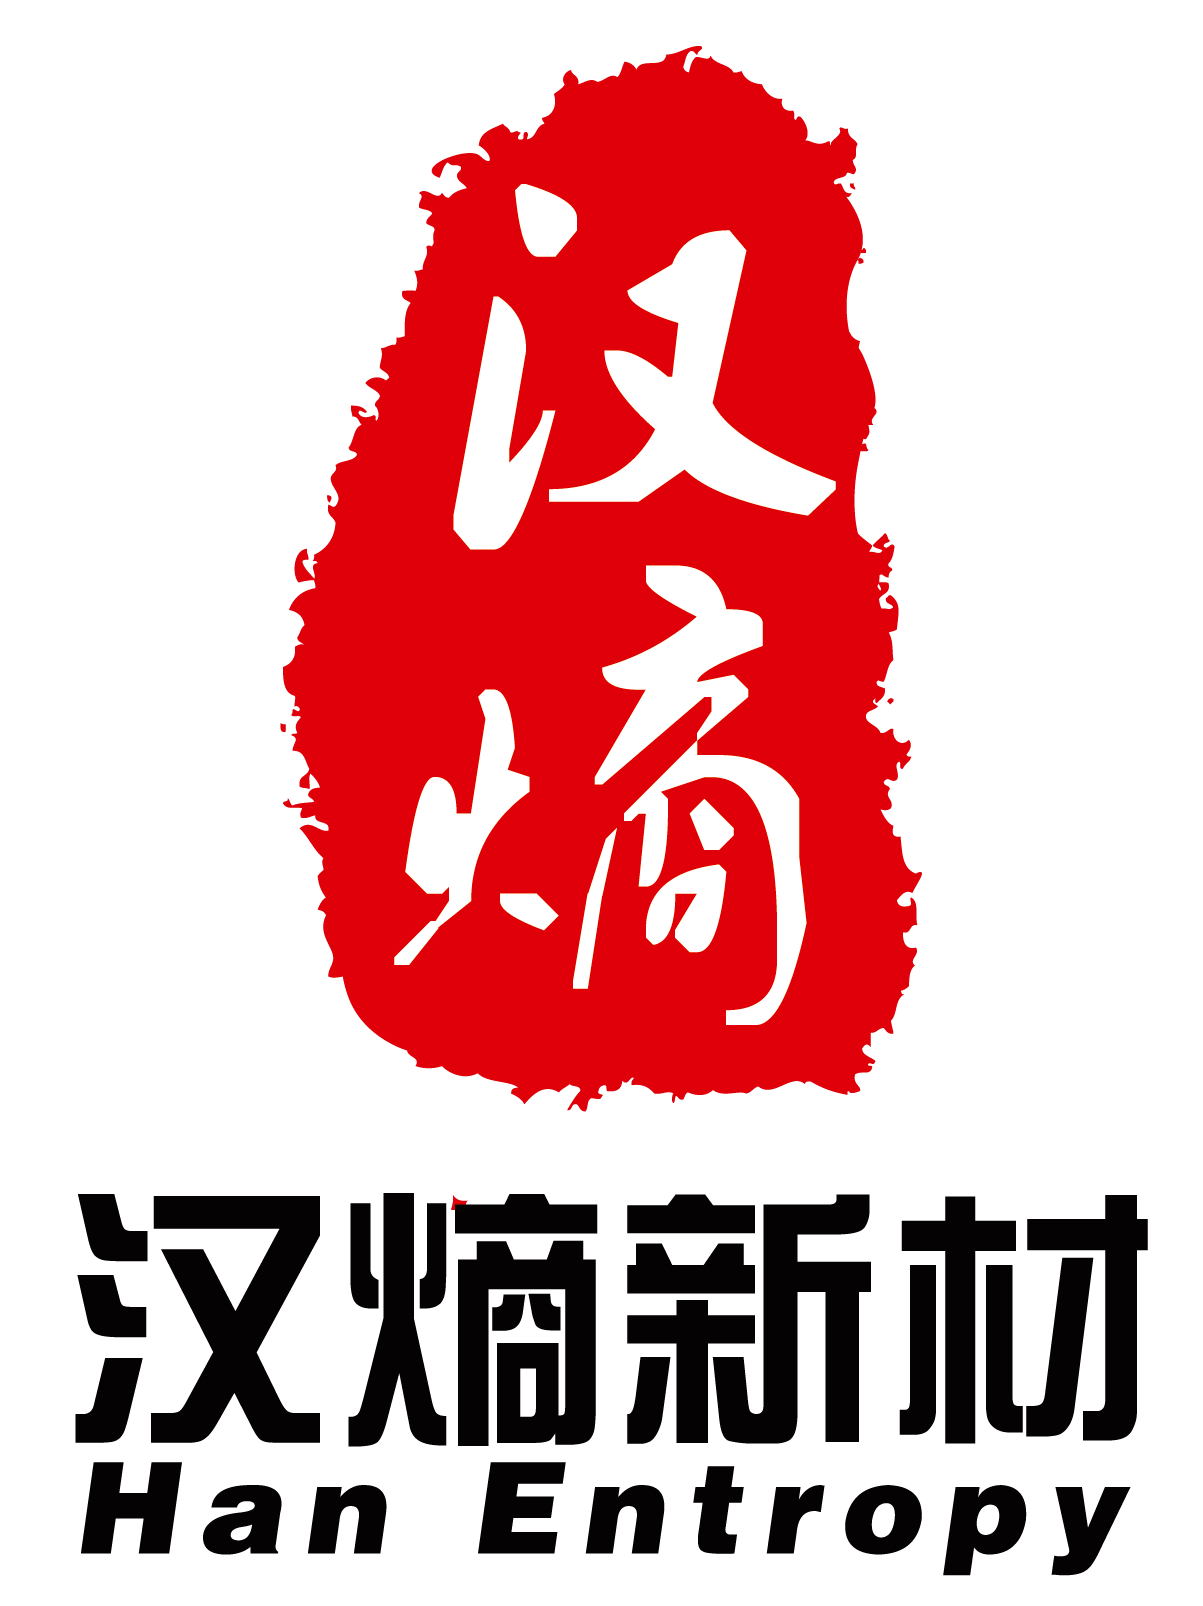 logo_12